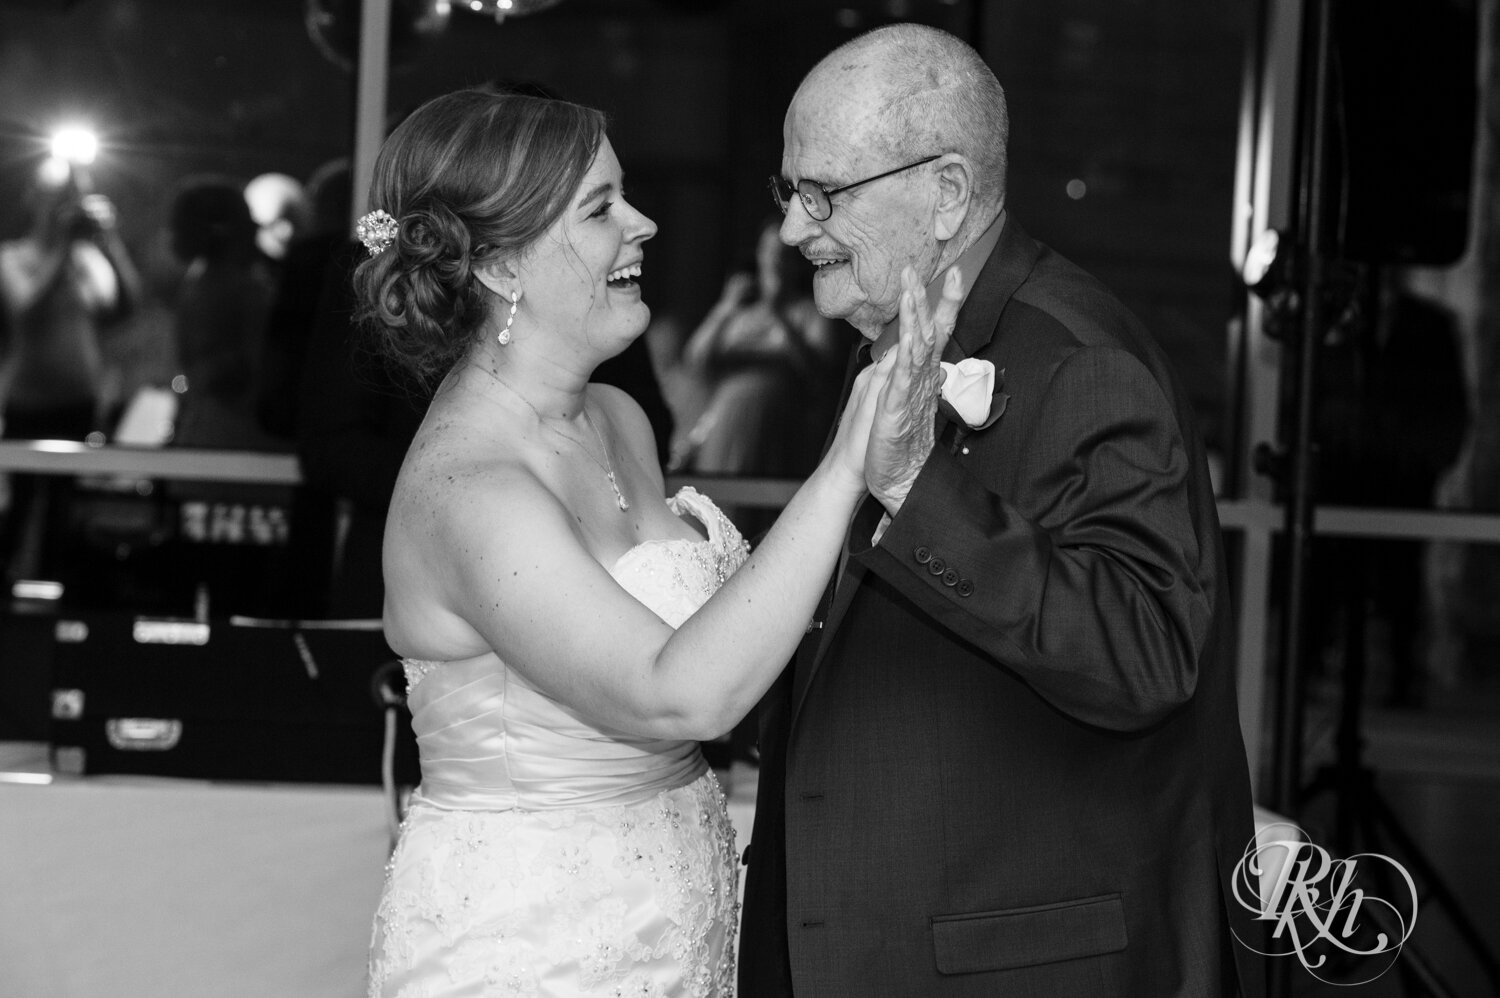 Bride and grandpa dance at wedding reception at Eagan Community Center in Eagan, Minnesota.